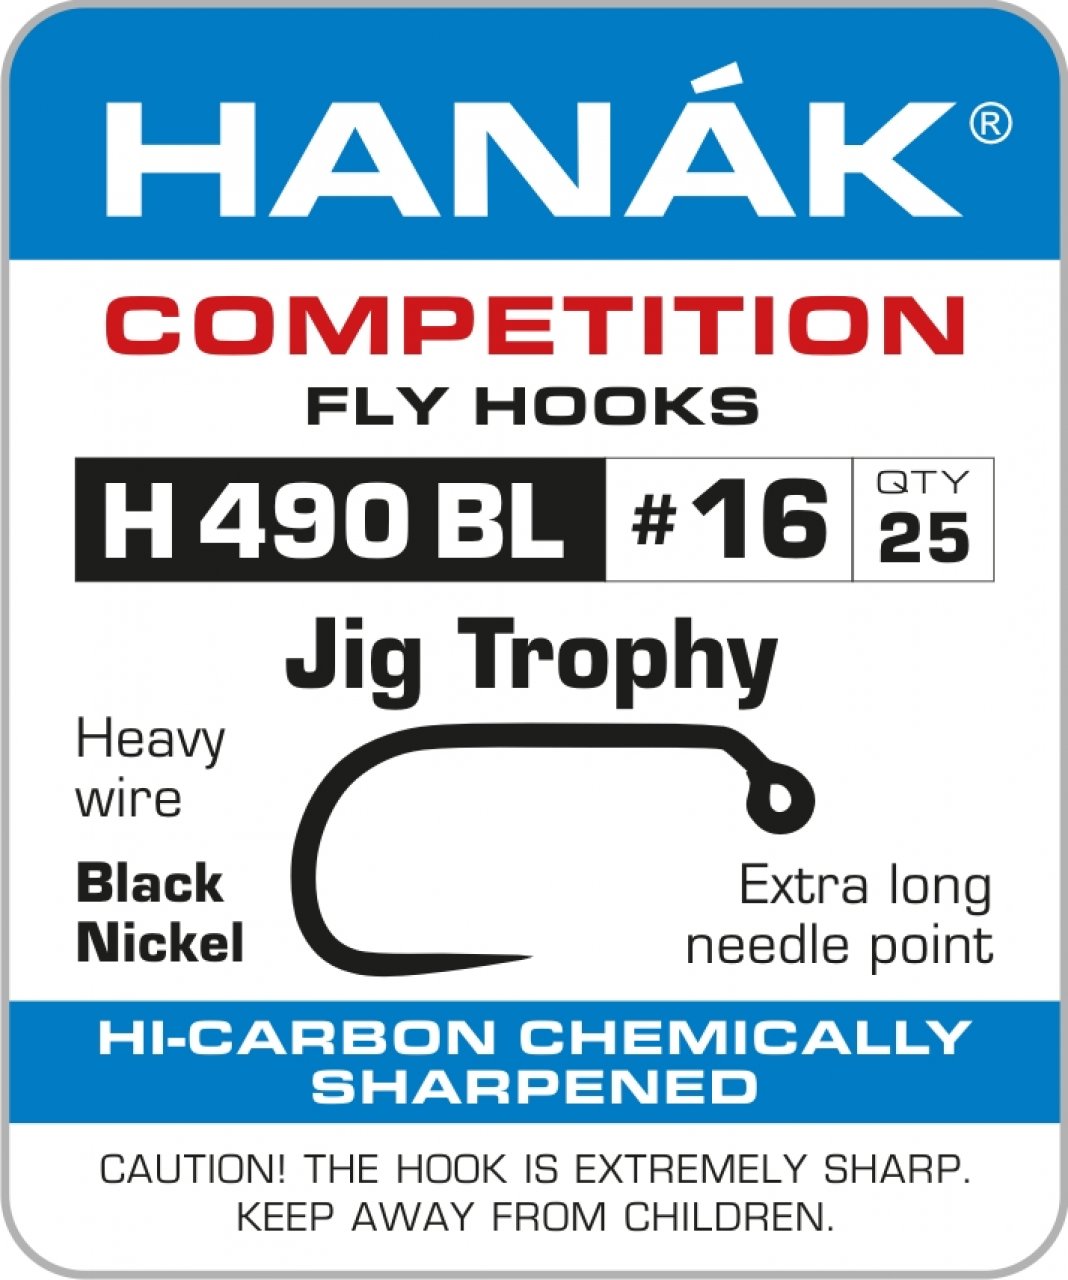 Hanak Competition 490Bl Jig Trophy Hooks - #16